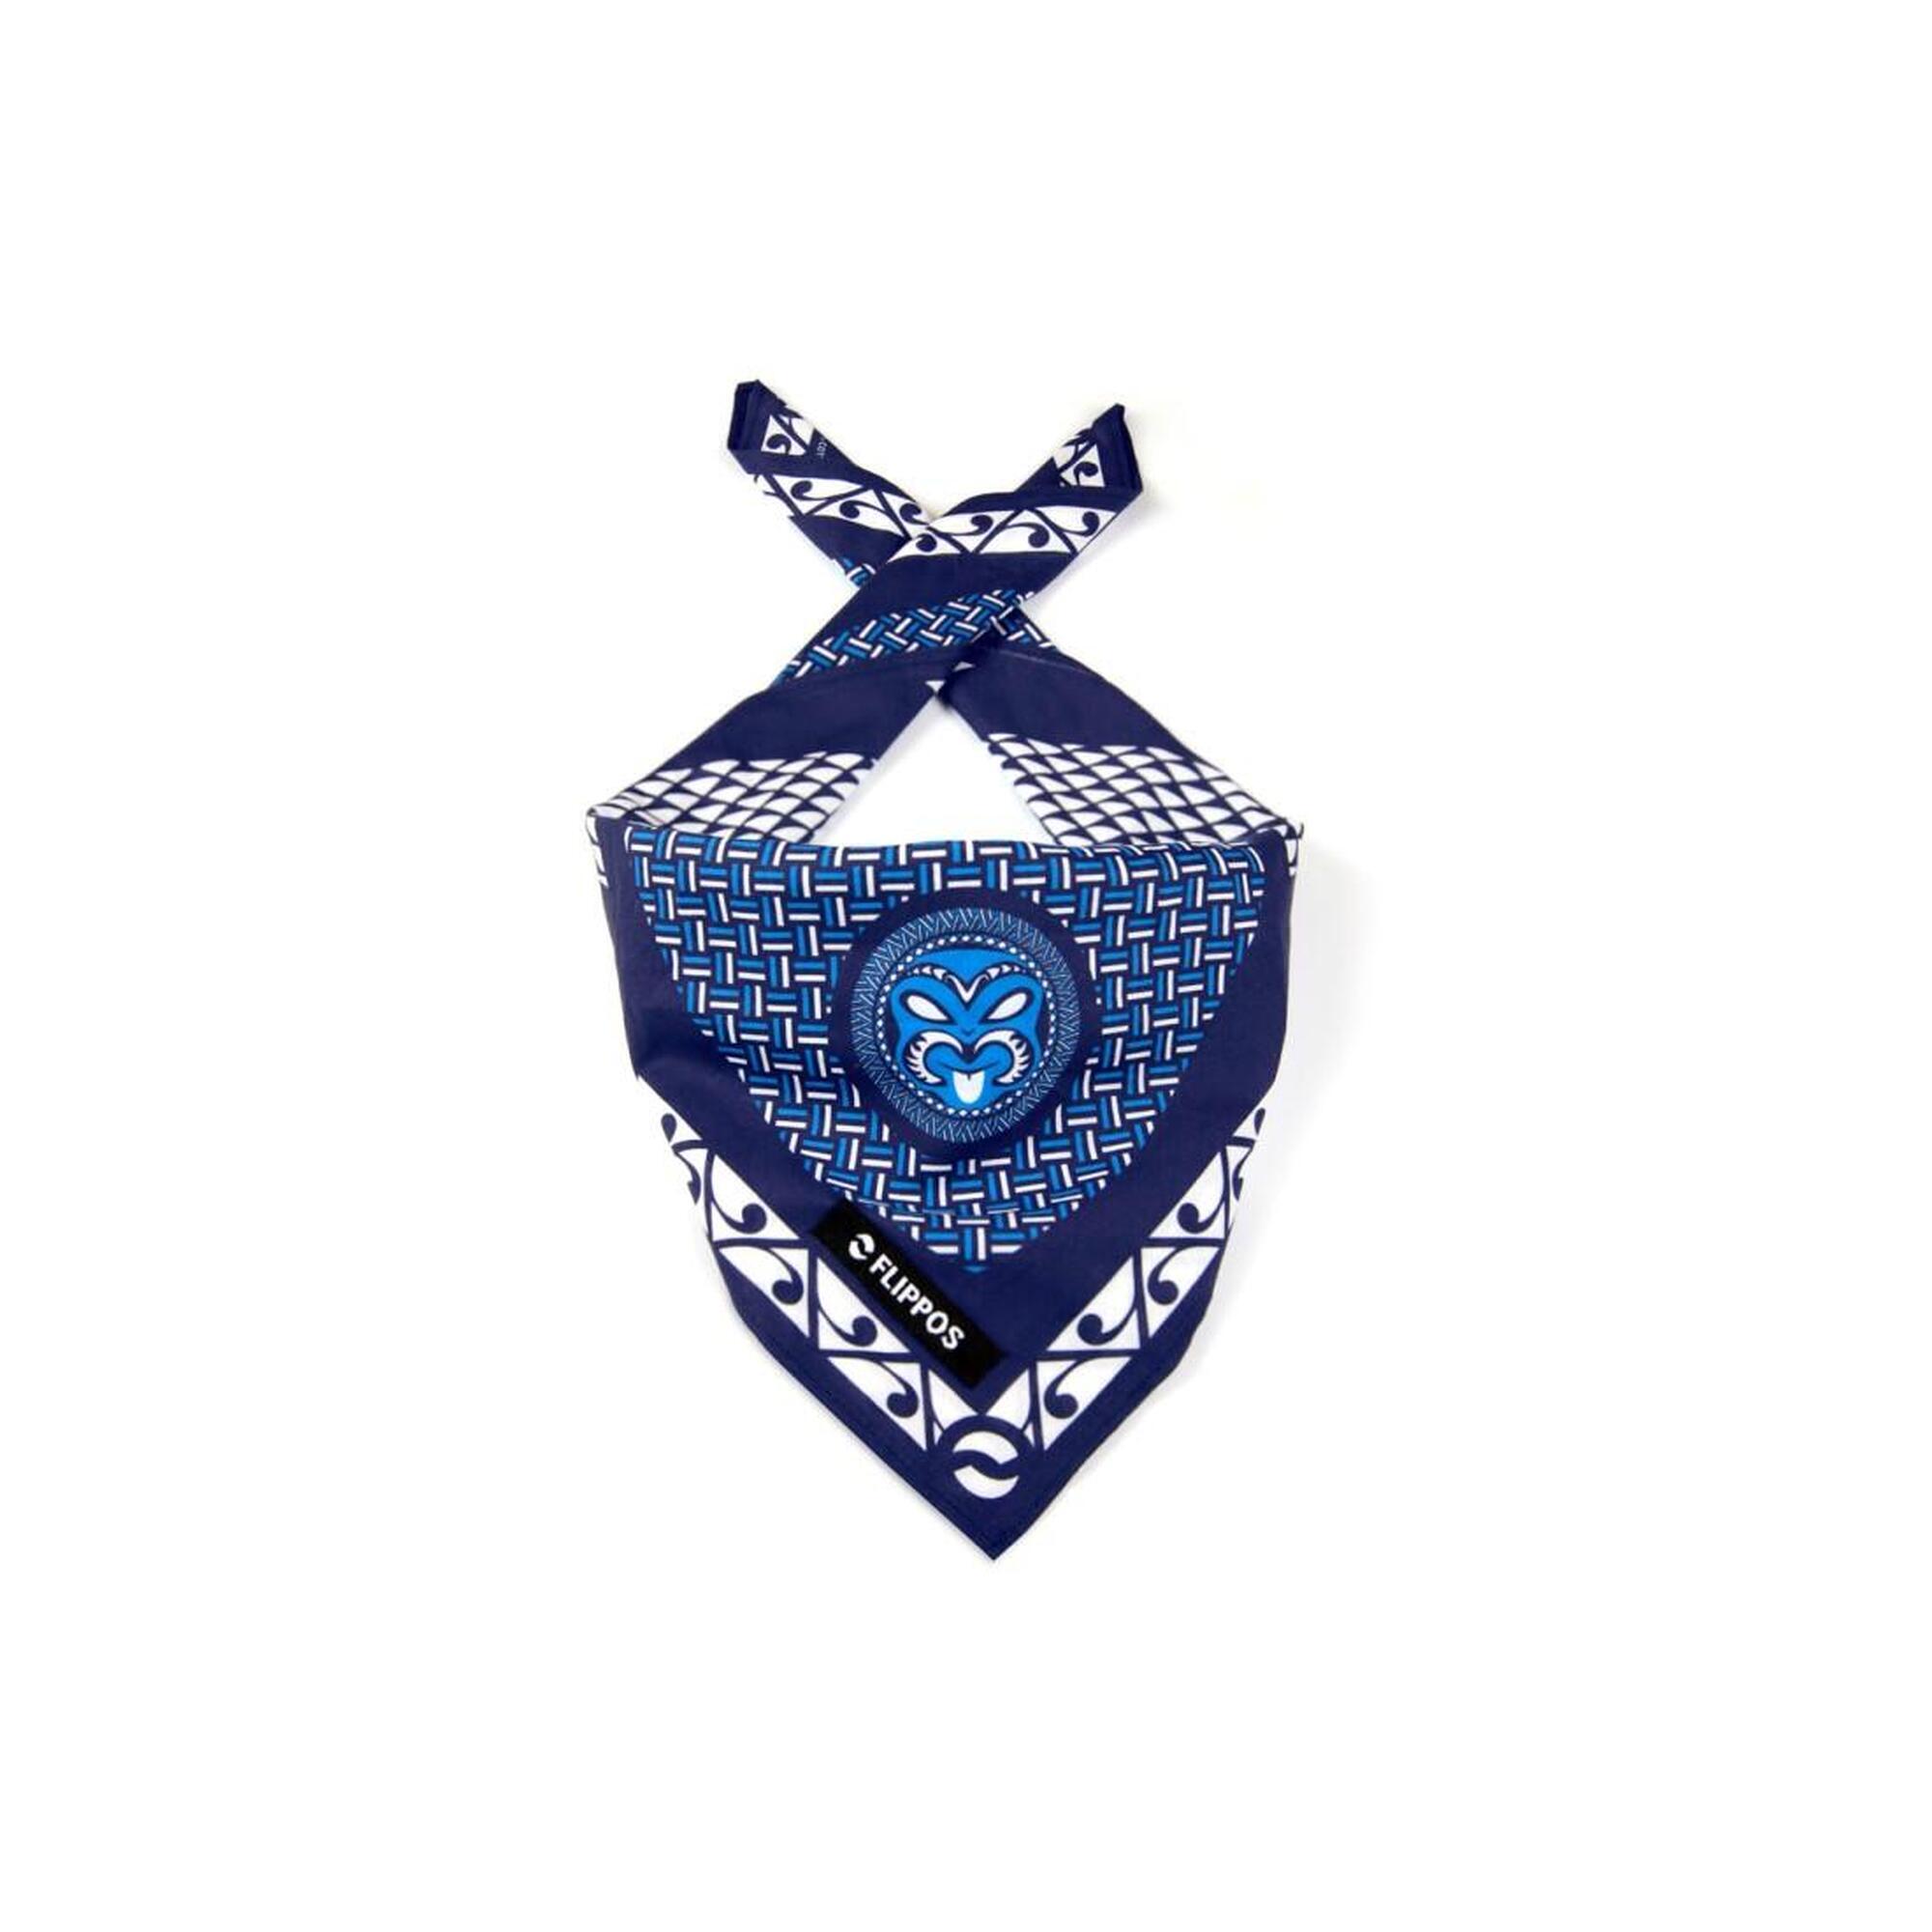 Ta Moko Bandana 台灣頭巾圍巾 - 藍色